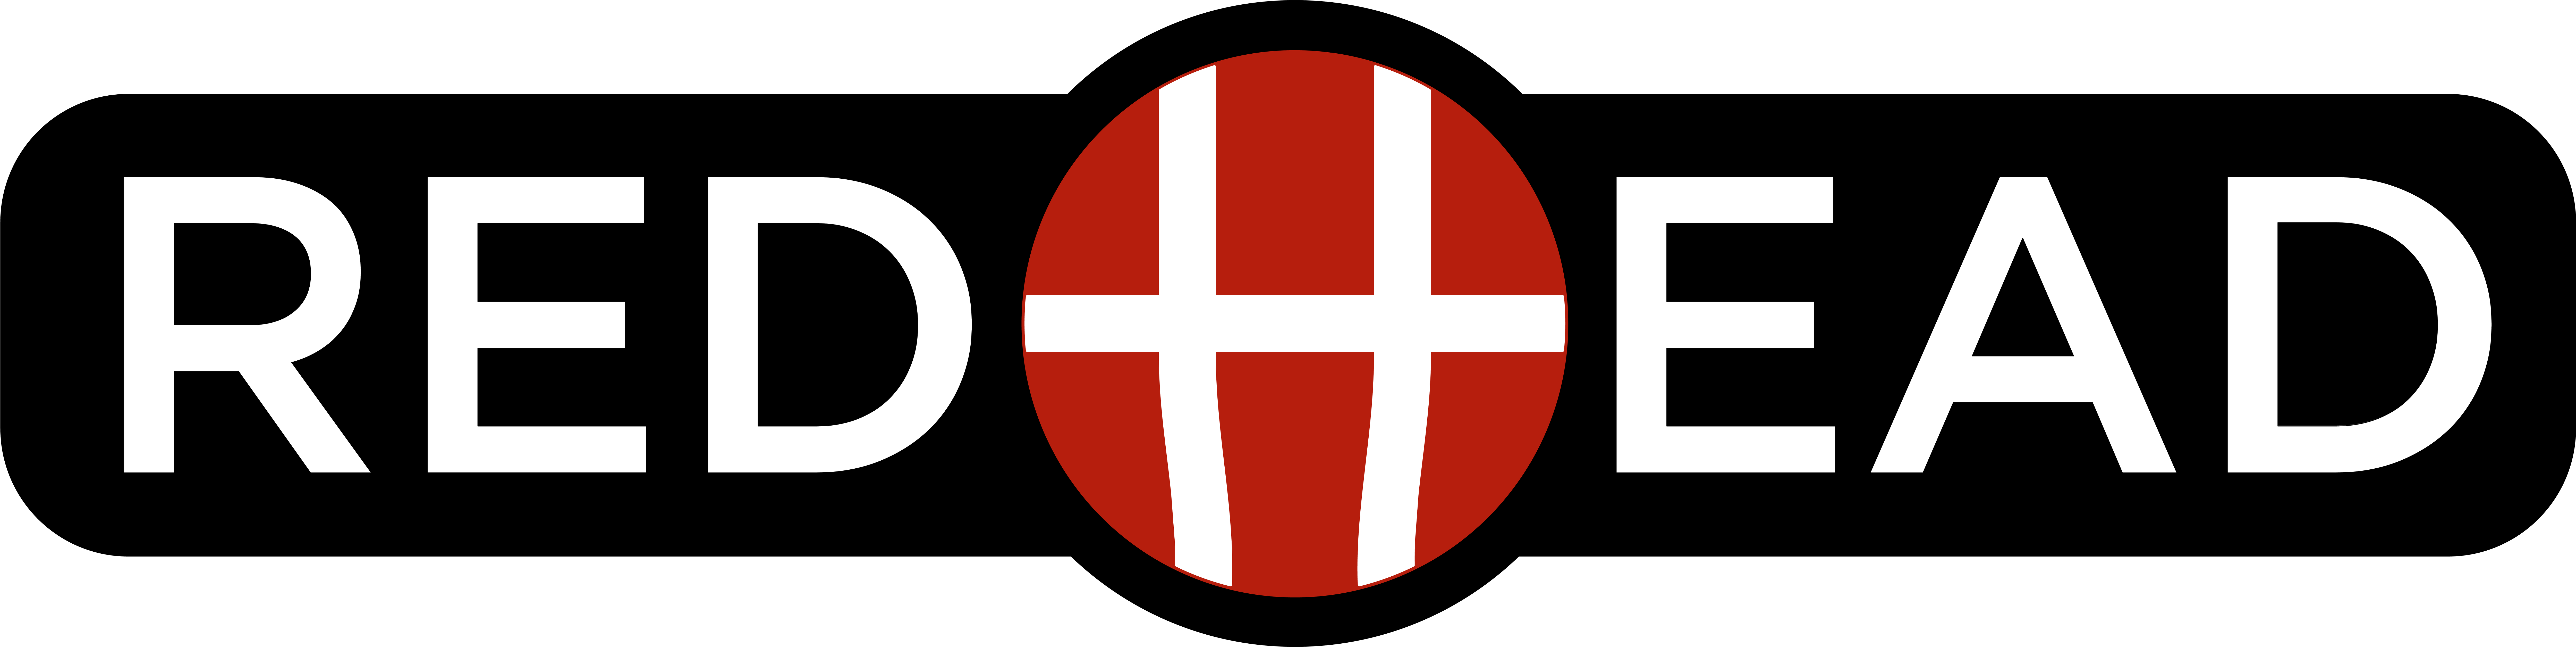 Redhead Brand Logo